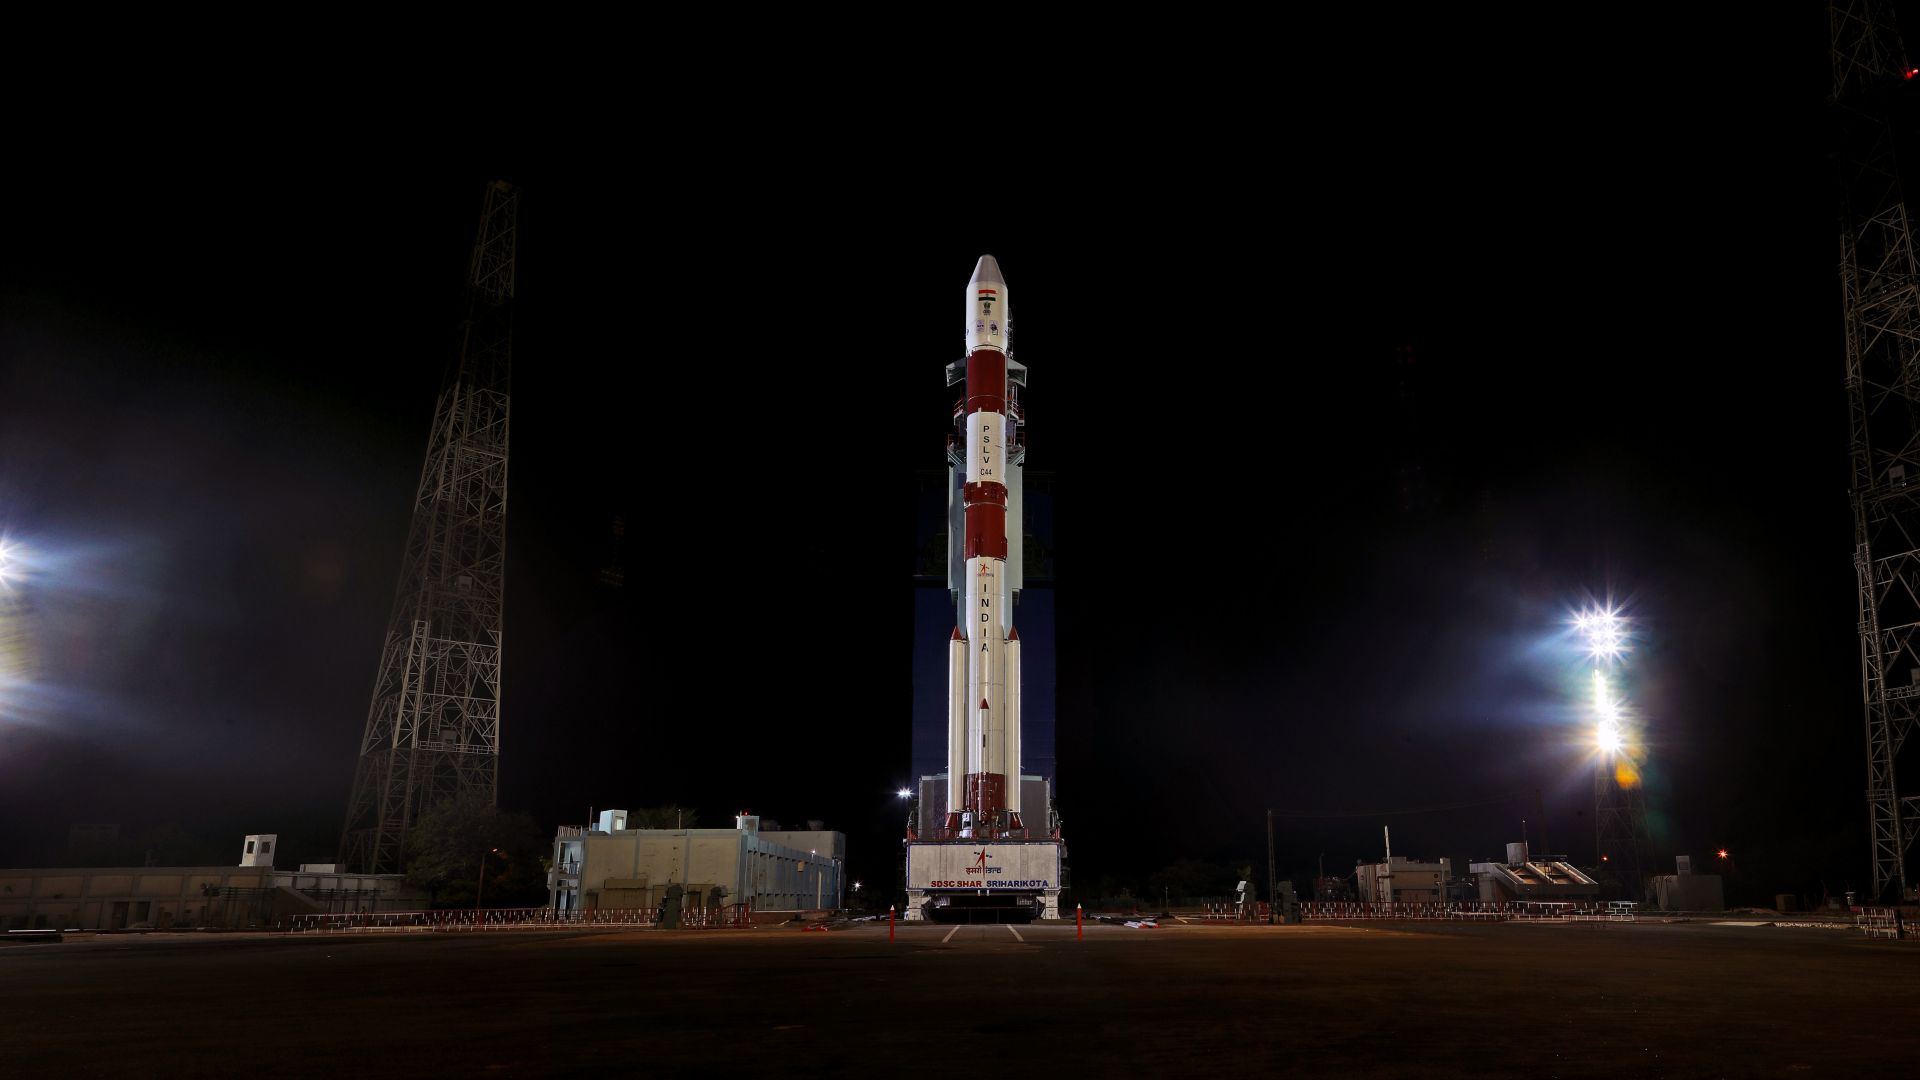 Индия изстреля най-лекия в света сателит